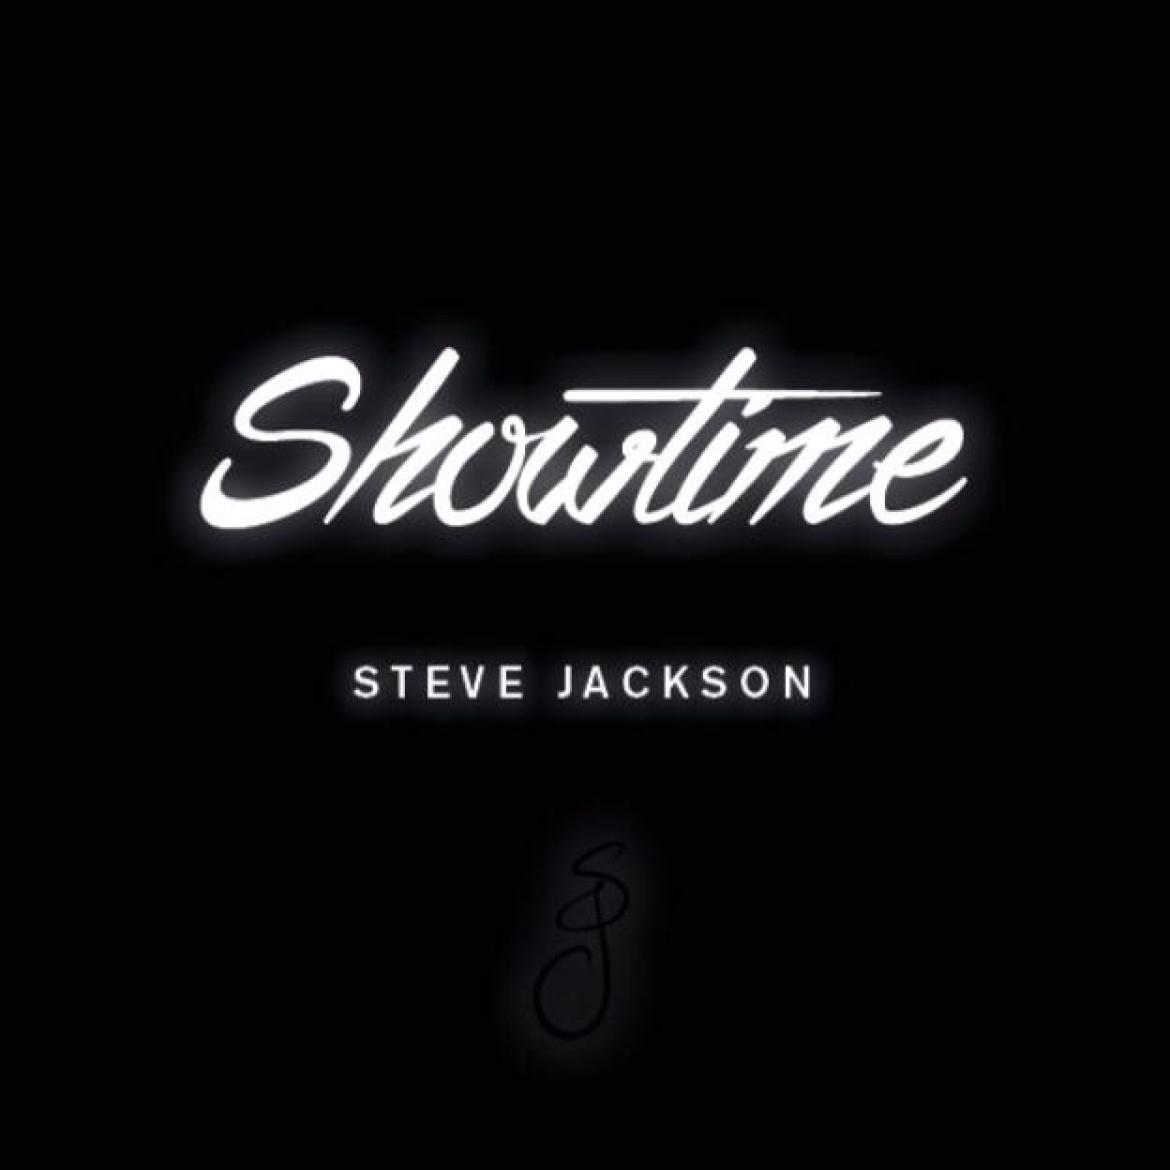 Steve Jackson - Showtime